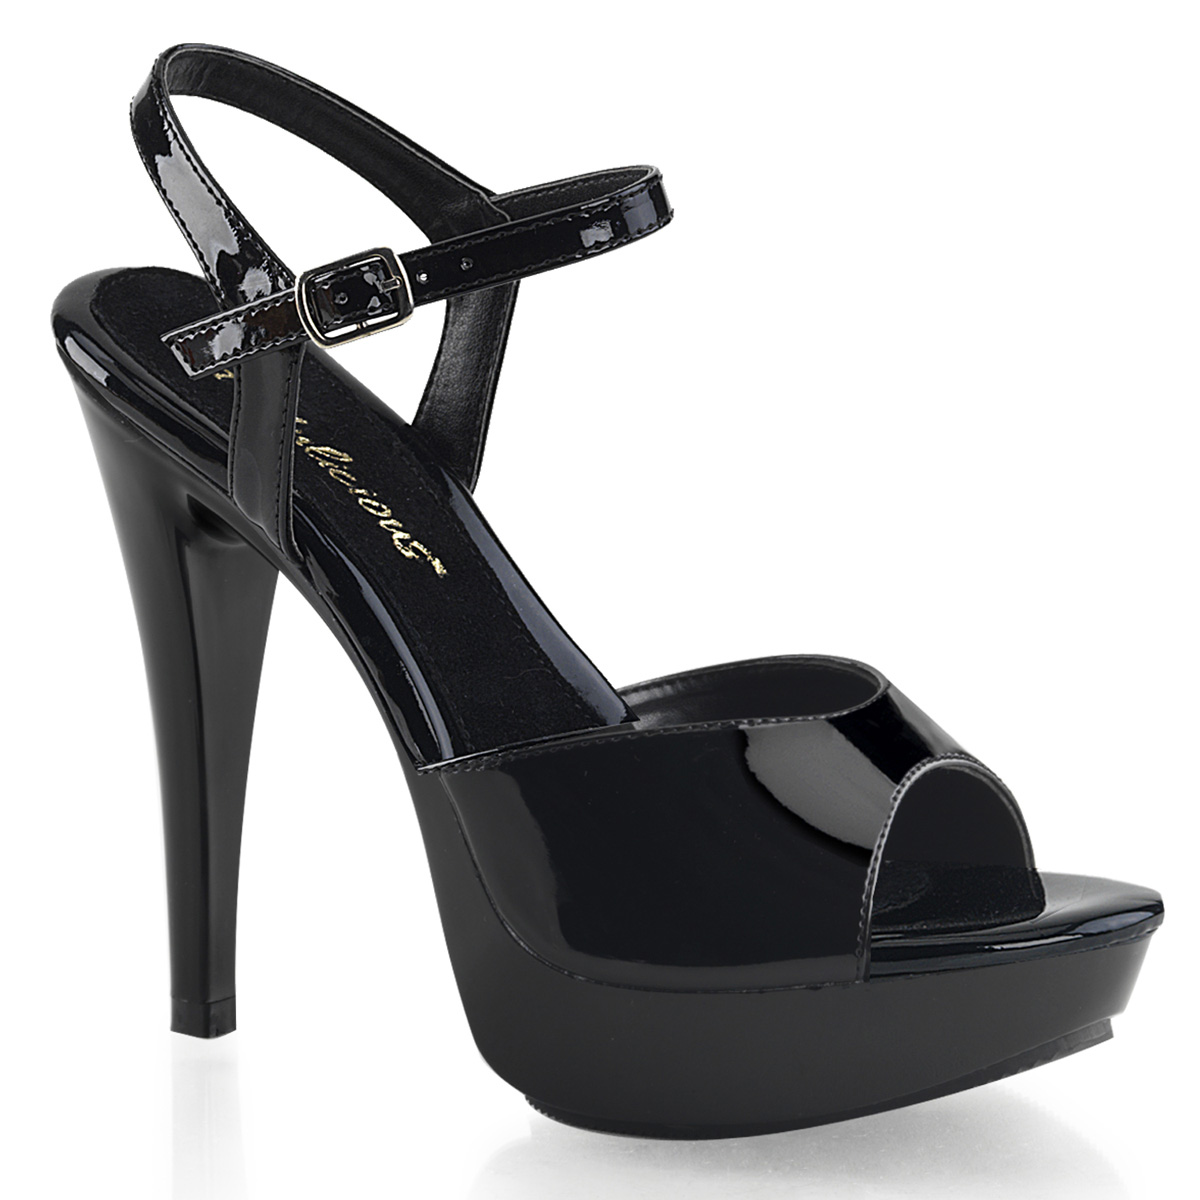 COCKTAIL-509 Fabulicious high heels platform ankle strap sandal black ...